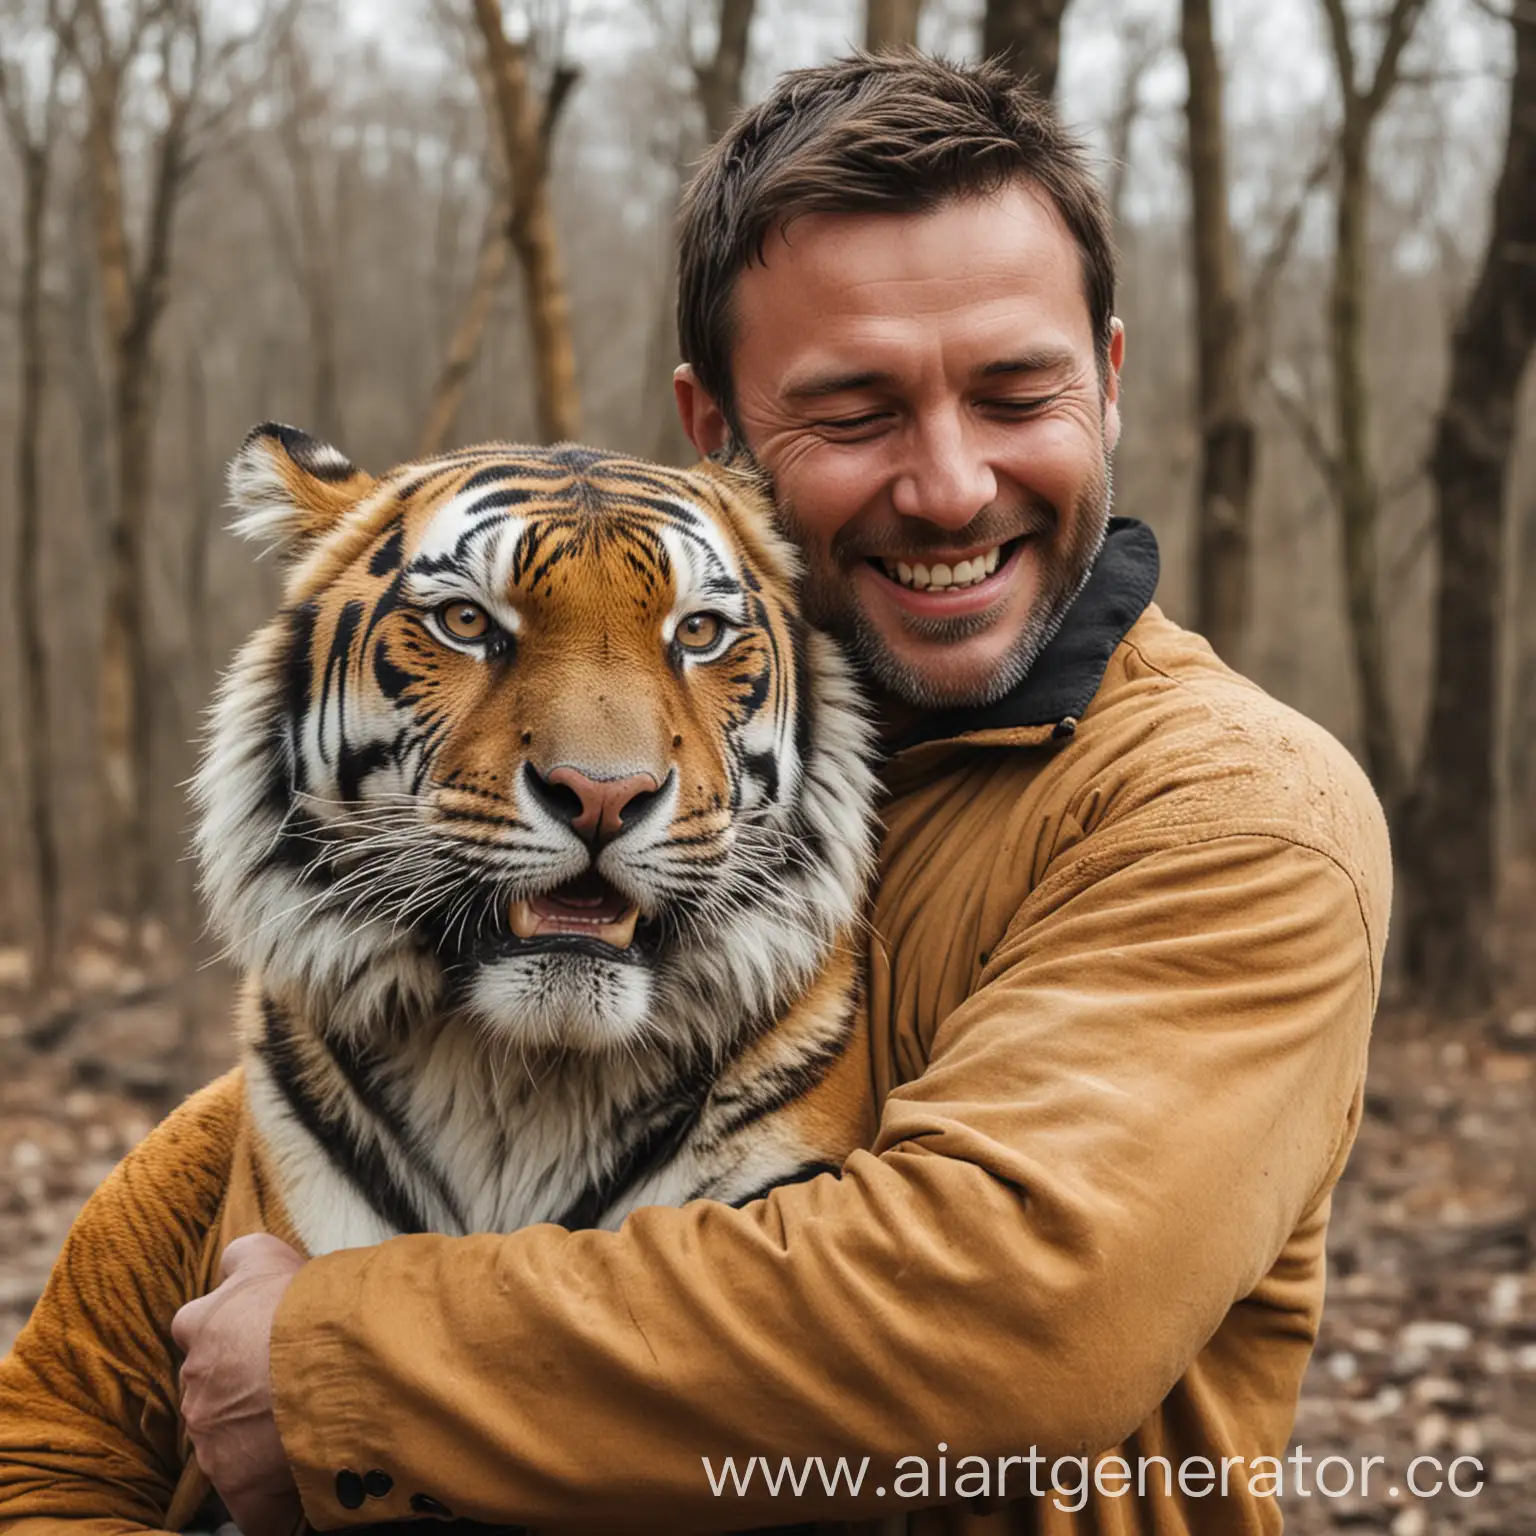 Joyful-Man-Embracing-a-Tiger-in-a-Heartwarming-Moment